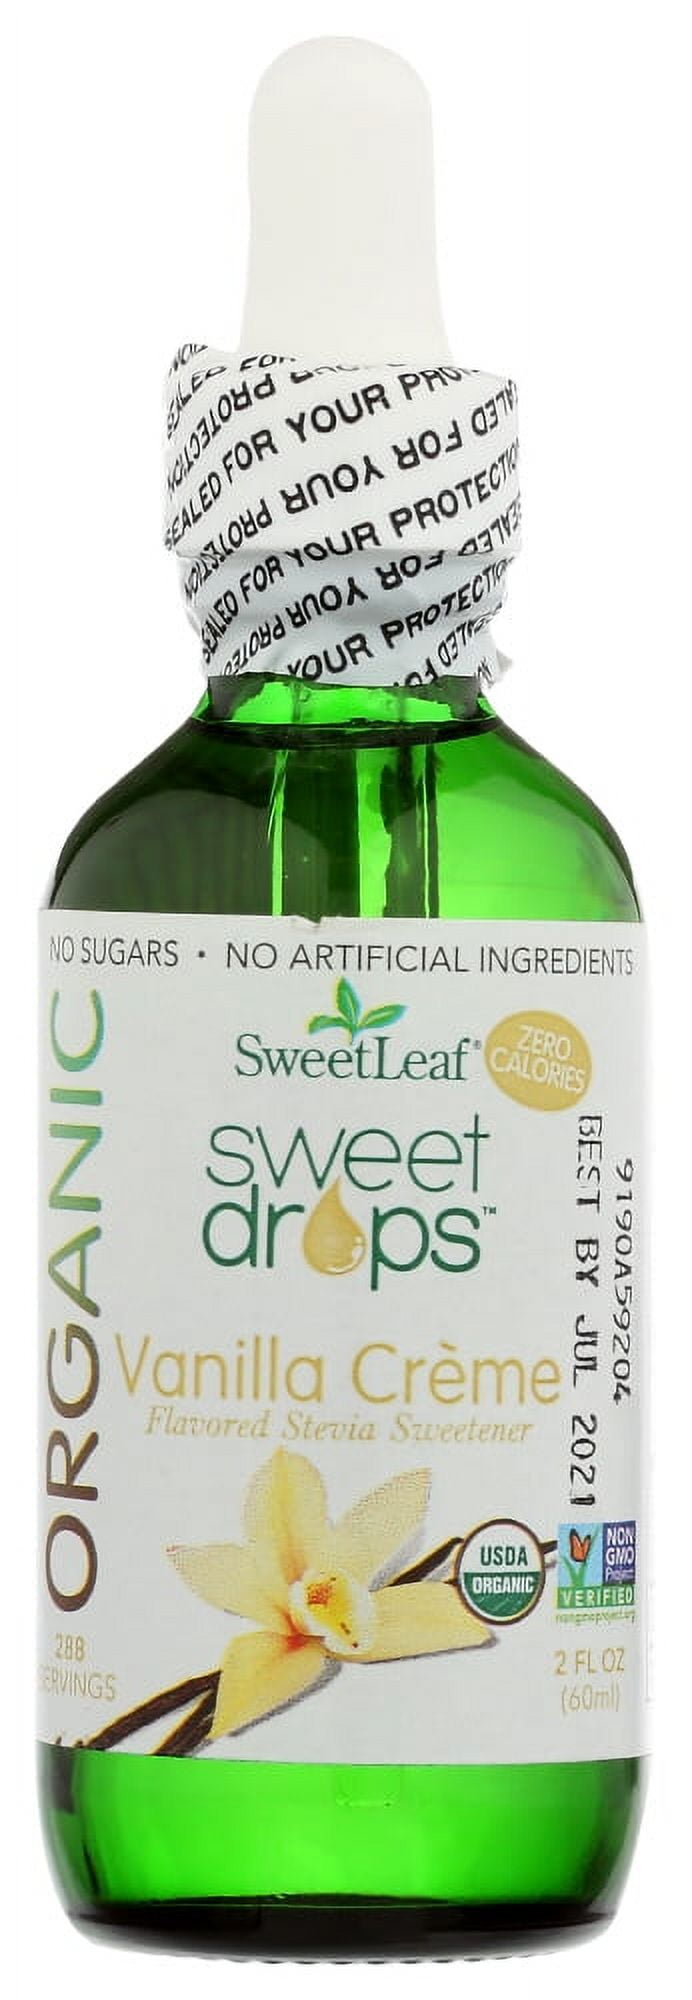 SweetLeaf Organic Liquid Stevia, Vanilla Creme Flavored 2 fl. oz